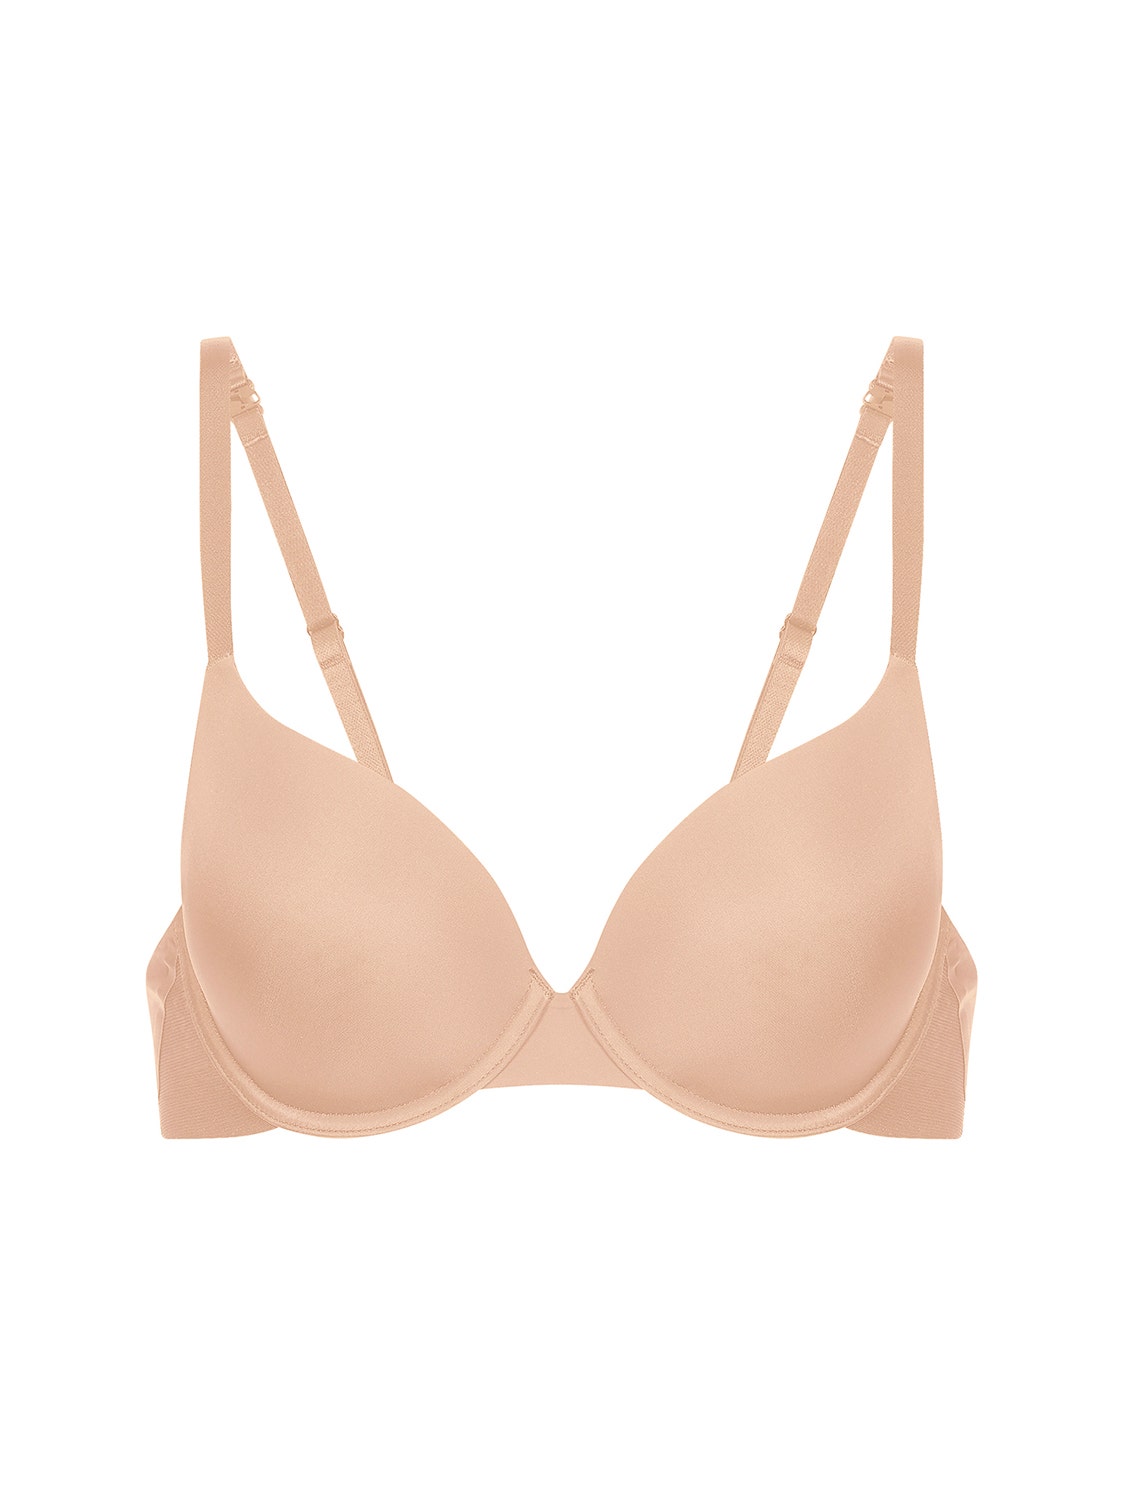 padding-plunge-bra-peau-rosee-essentiel-40